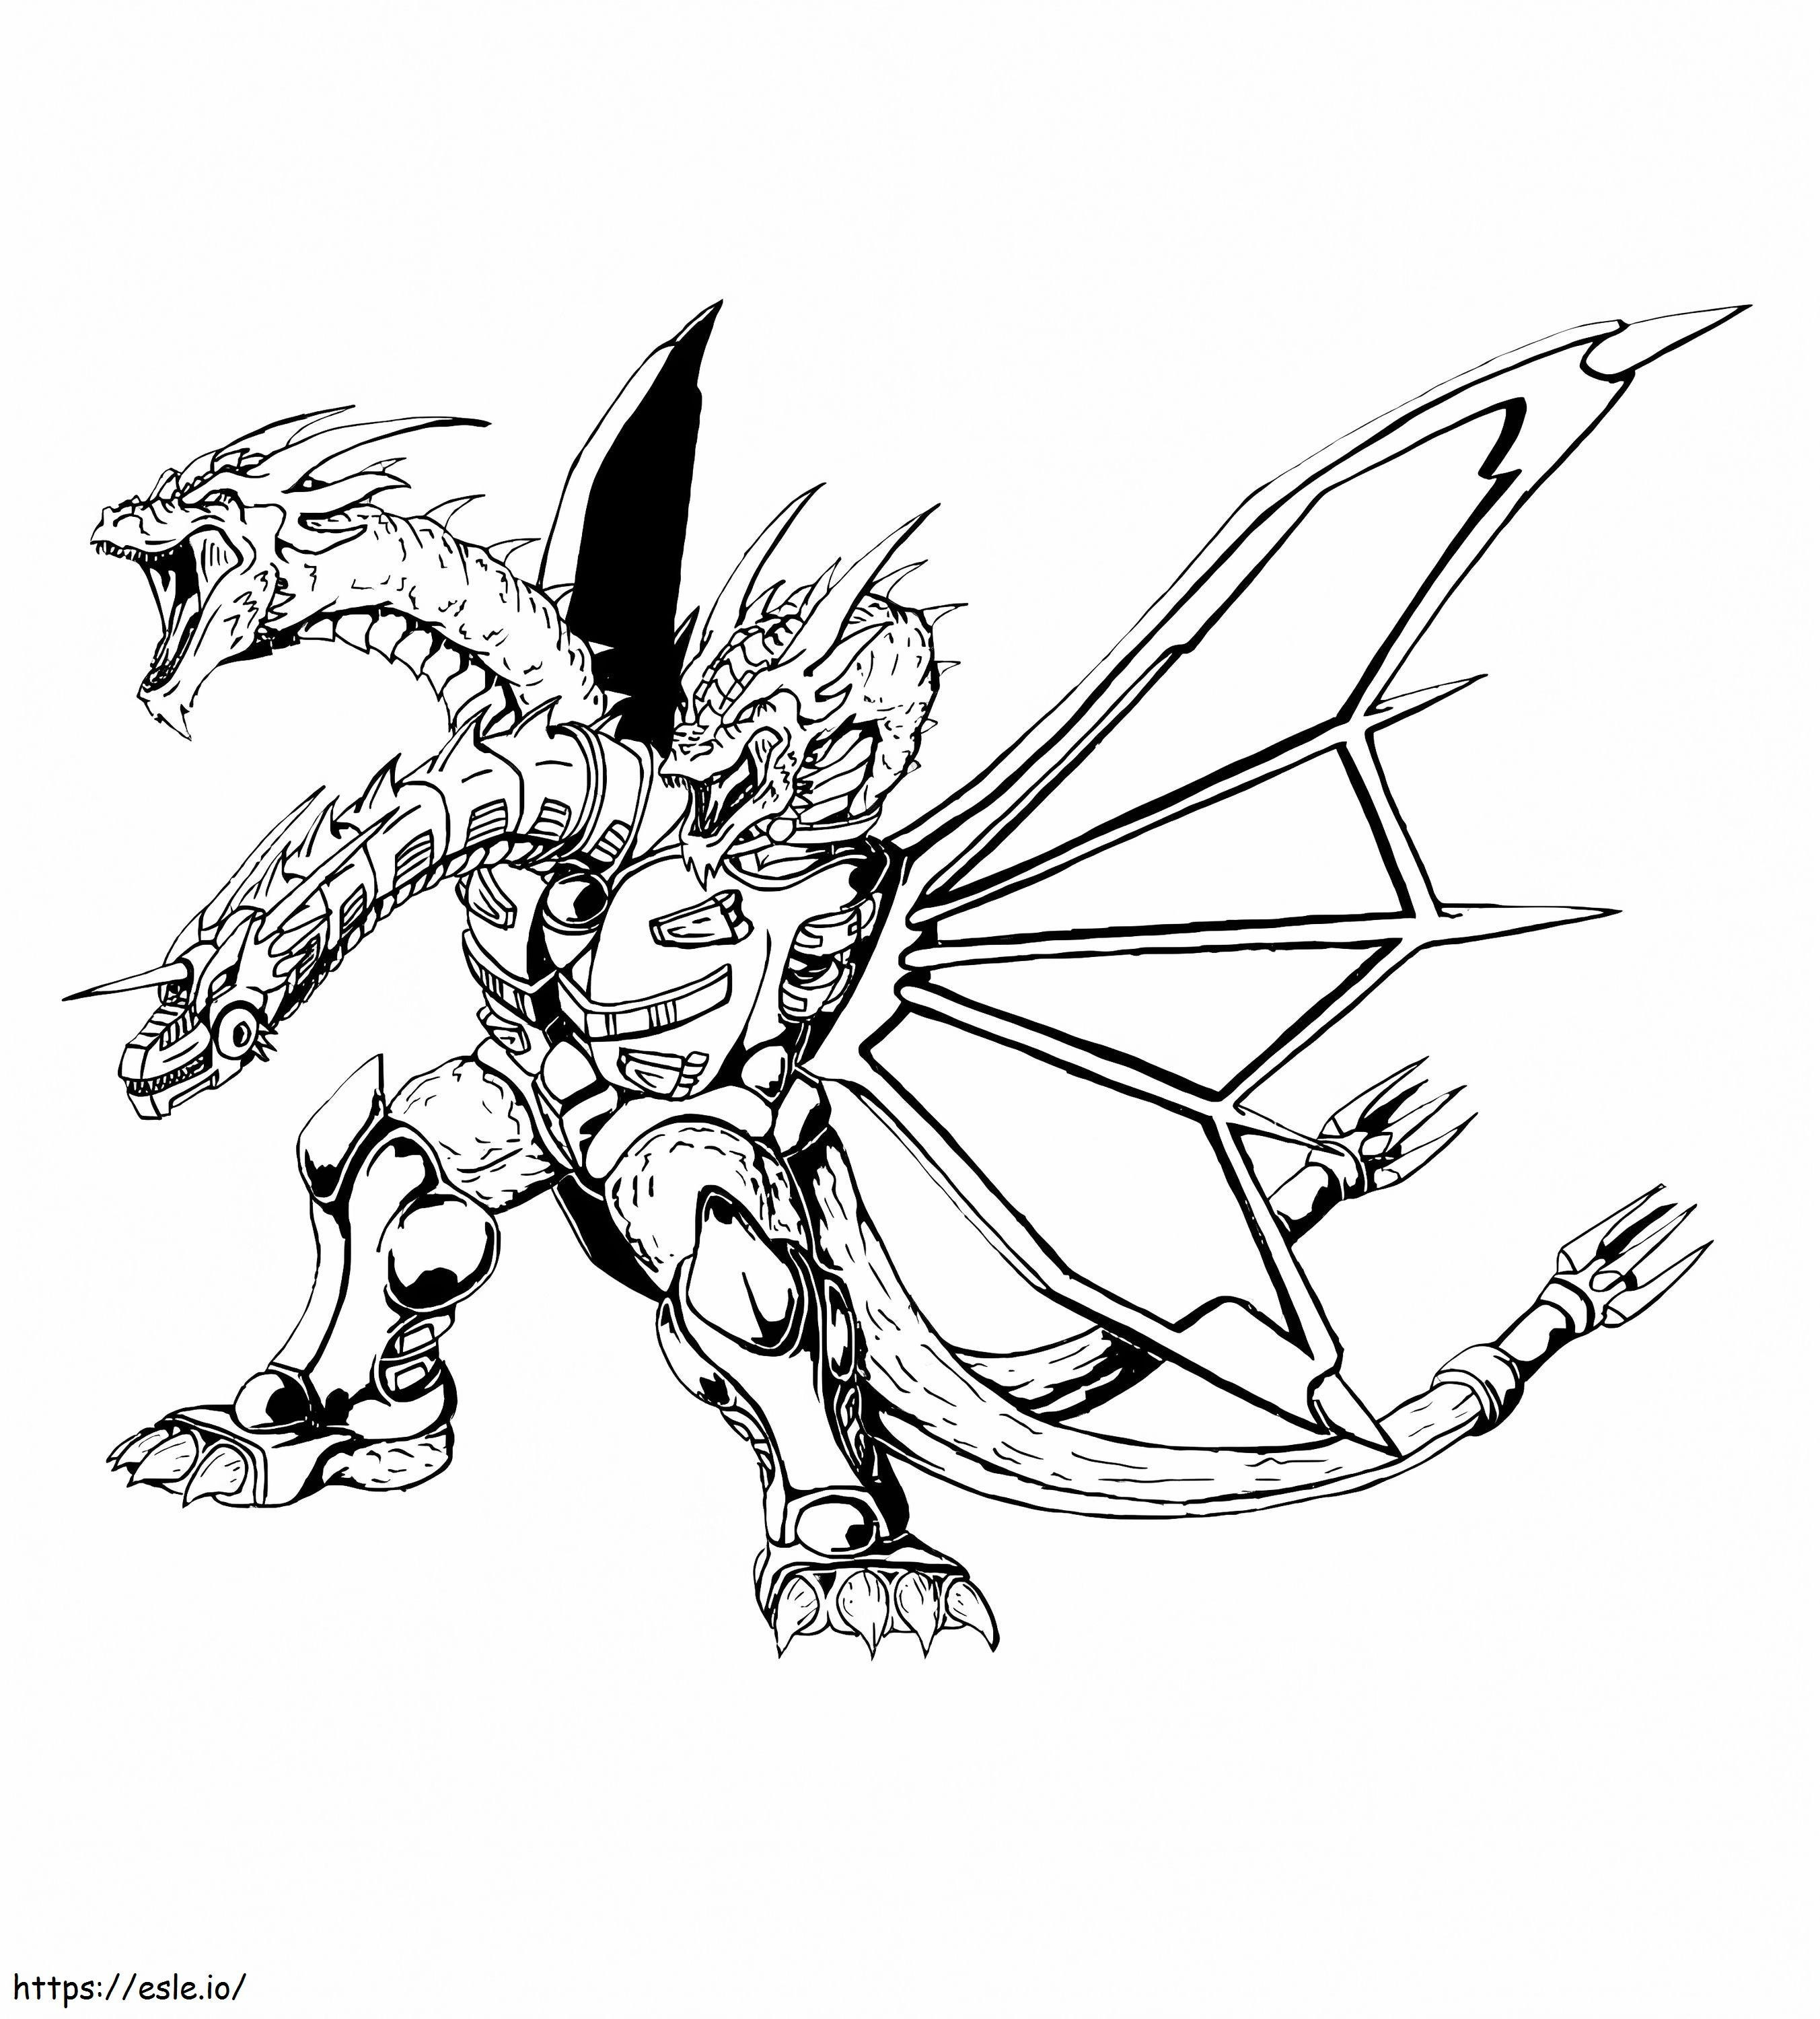 Monstruo Ghidorah coloring page